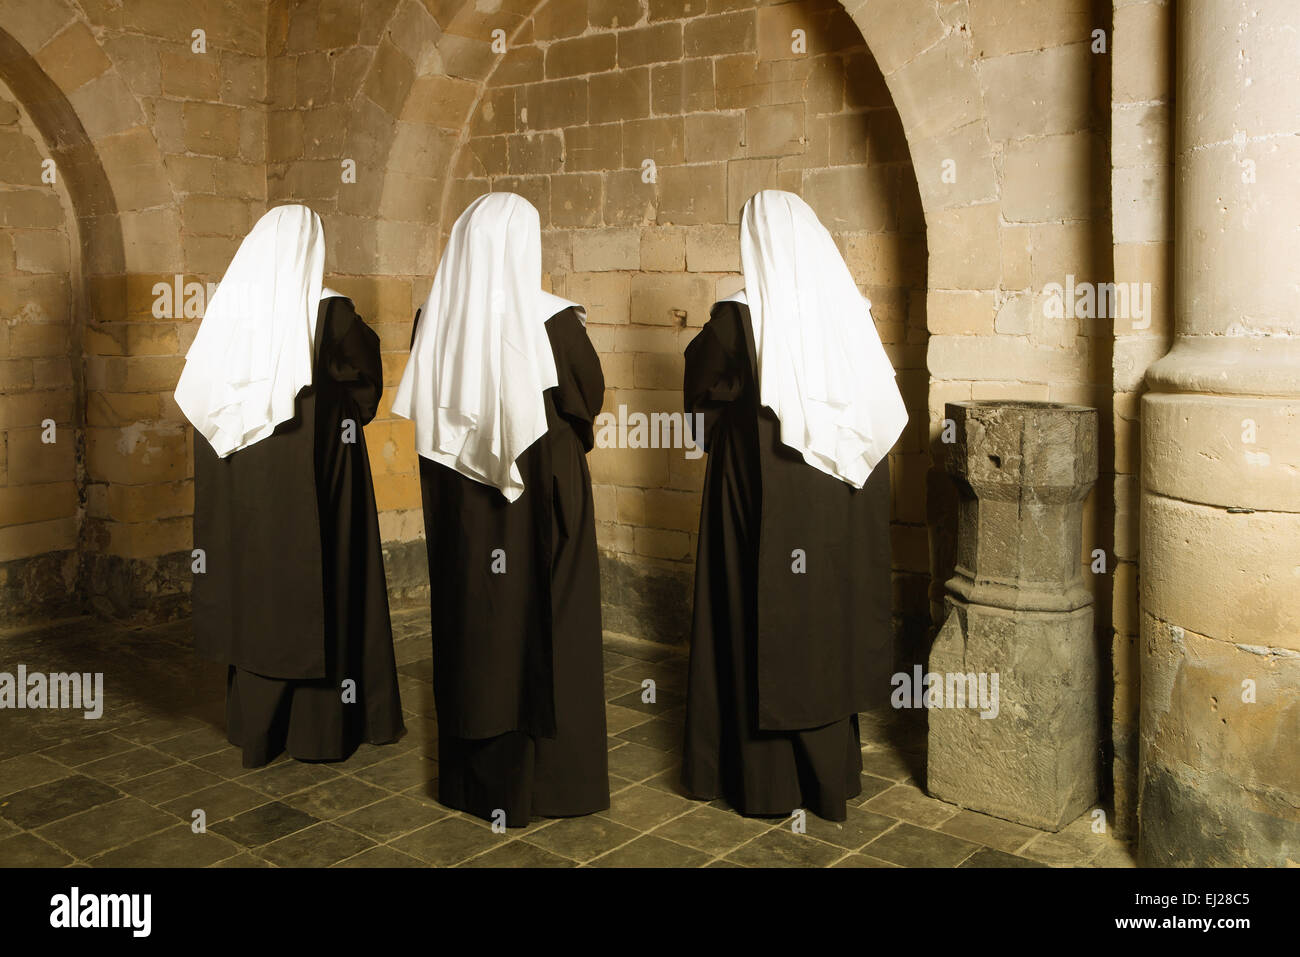 Nuns veil hi-res stock photography and images - Alamy